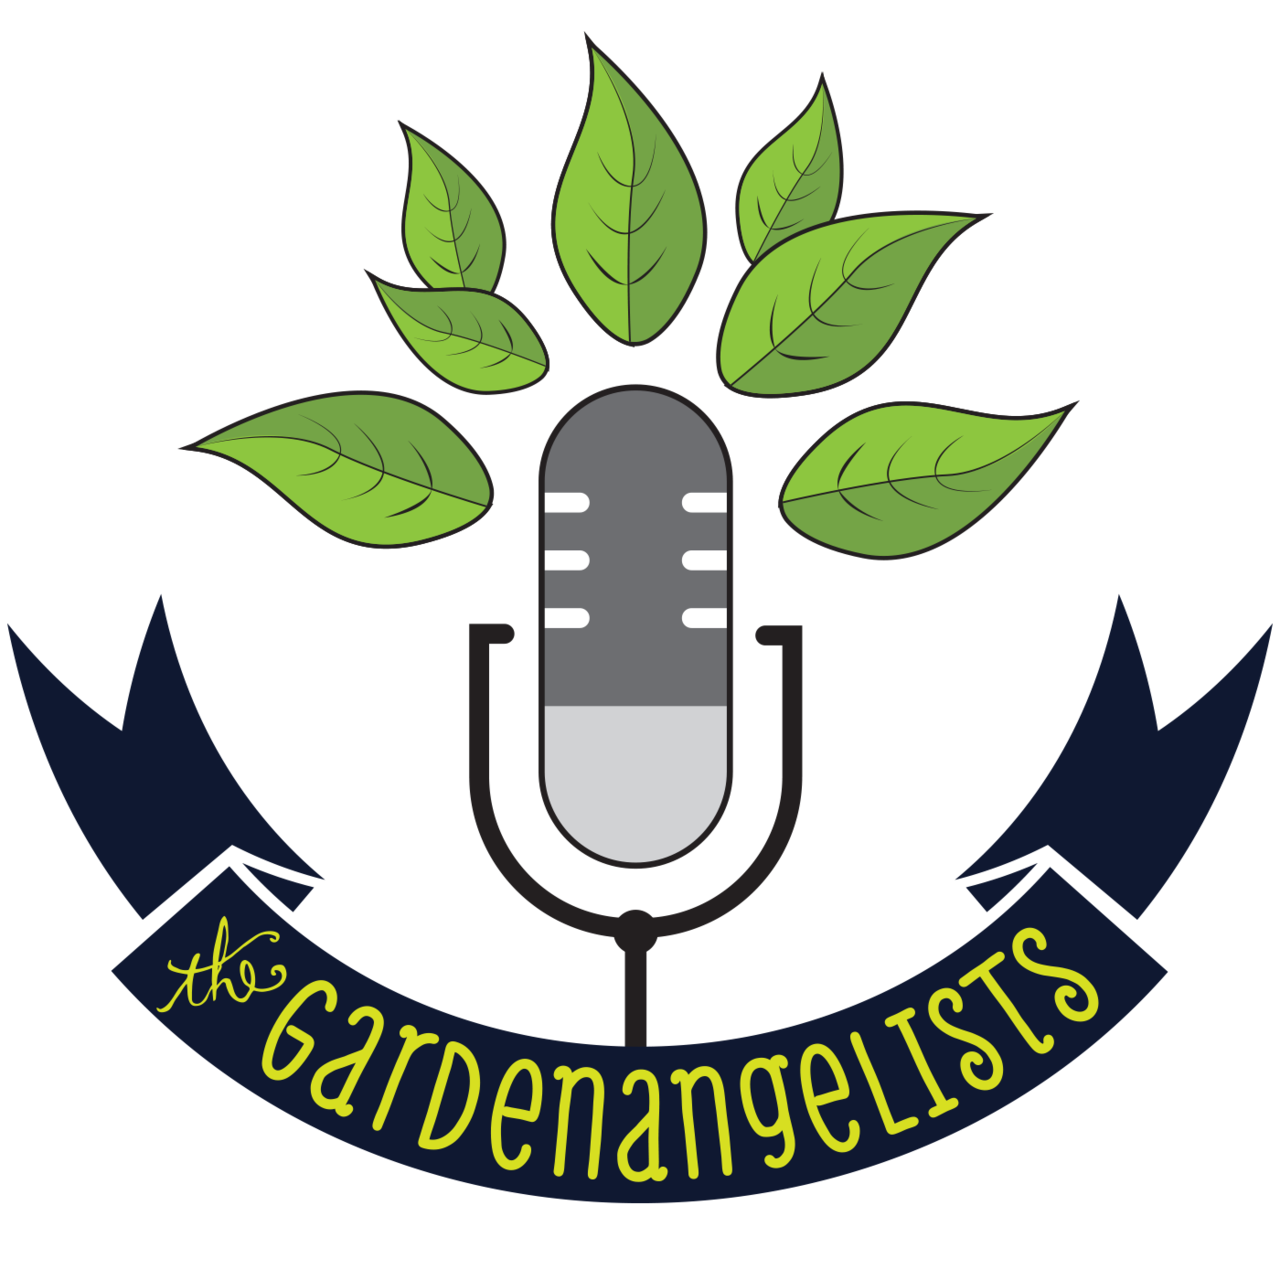 Artwork for The Gardenangelists' Podcast Newsletter